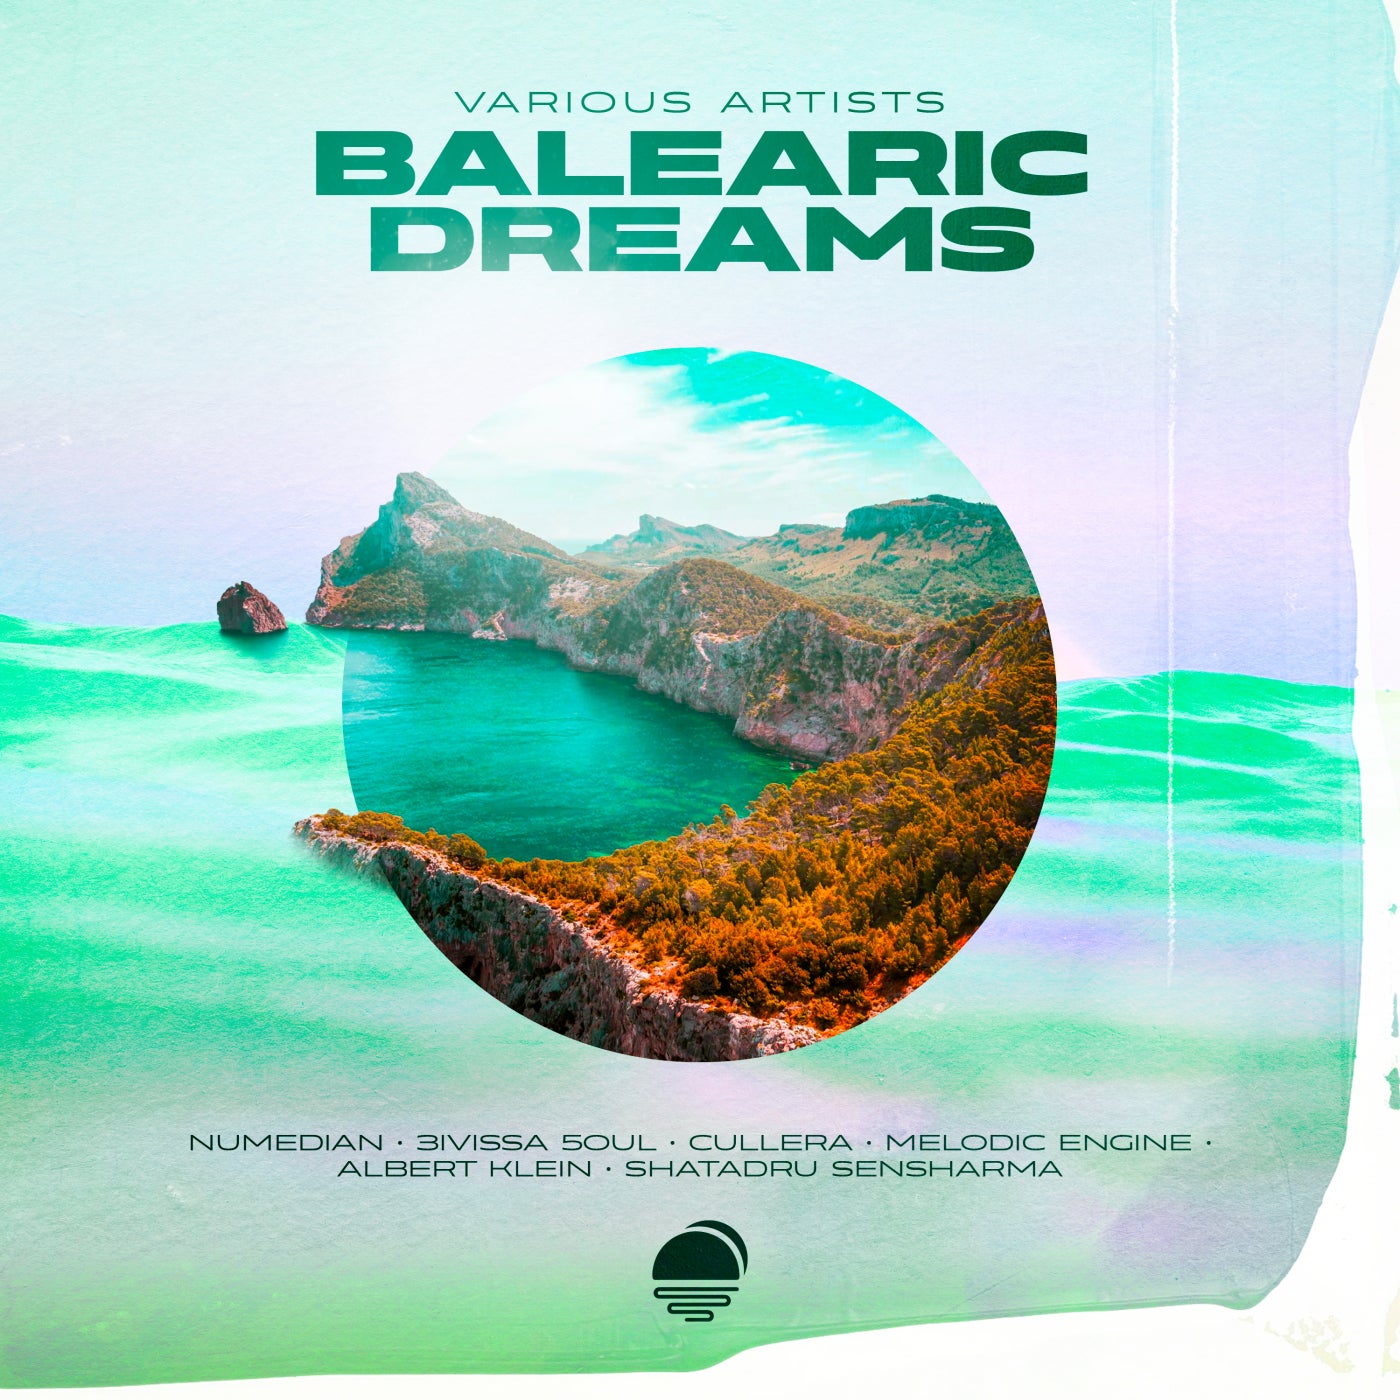 Balearic Dreams